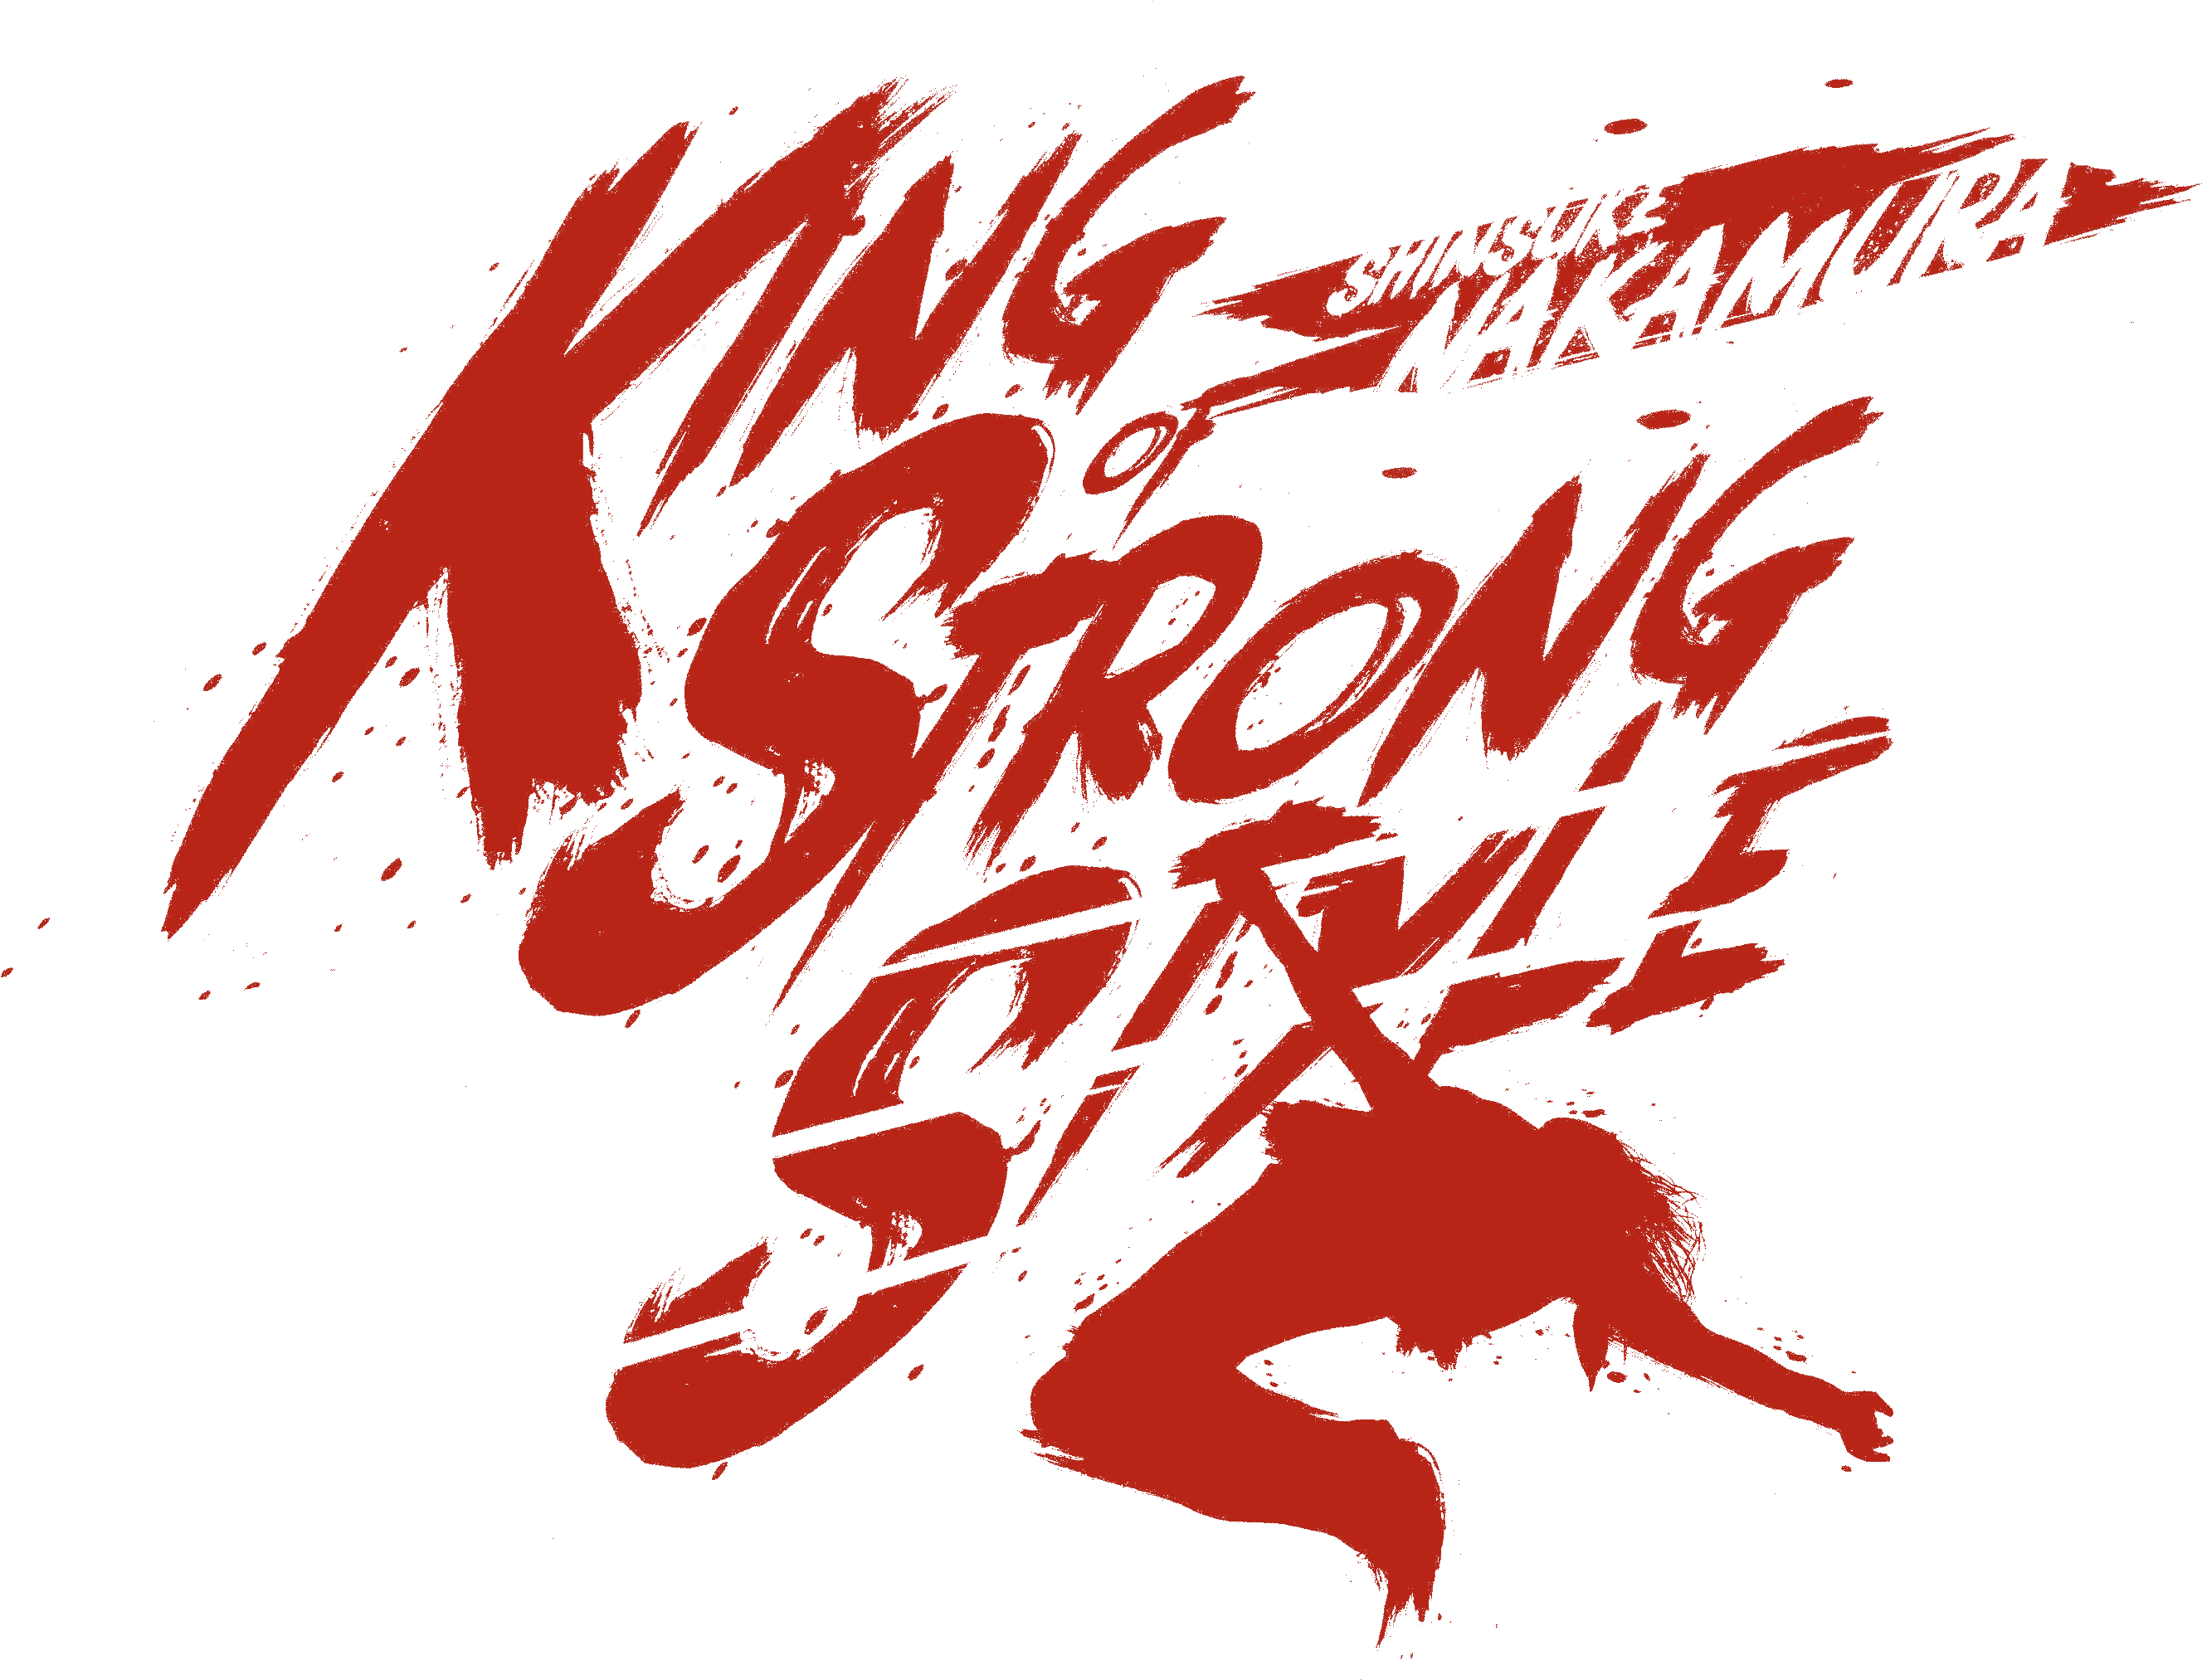 Download Here You Go Dude - Logo De Shinsuke Nakamura PNG Image with No Bac...